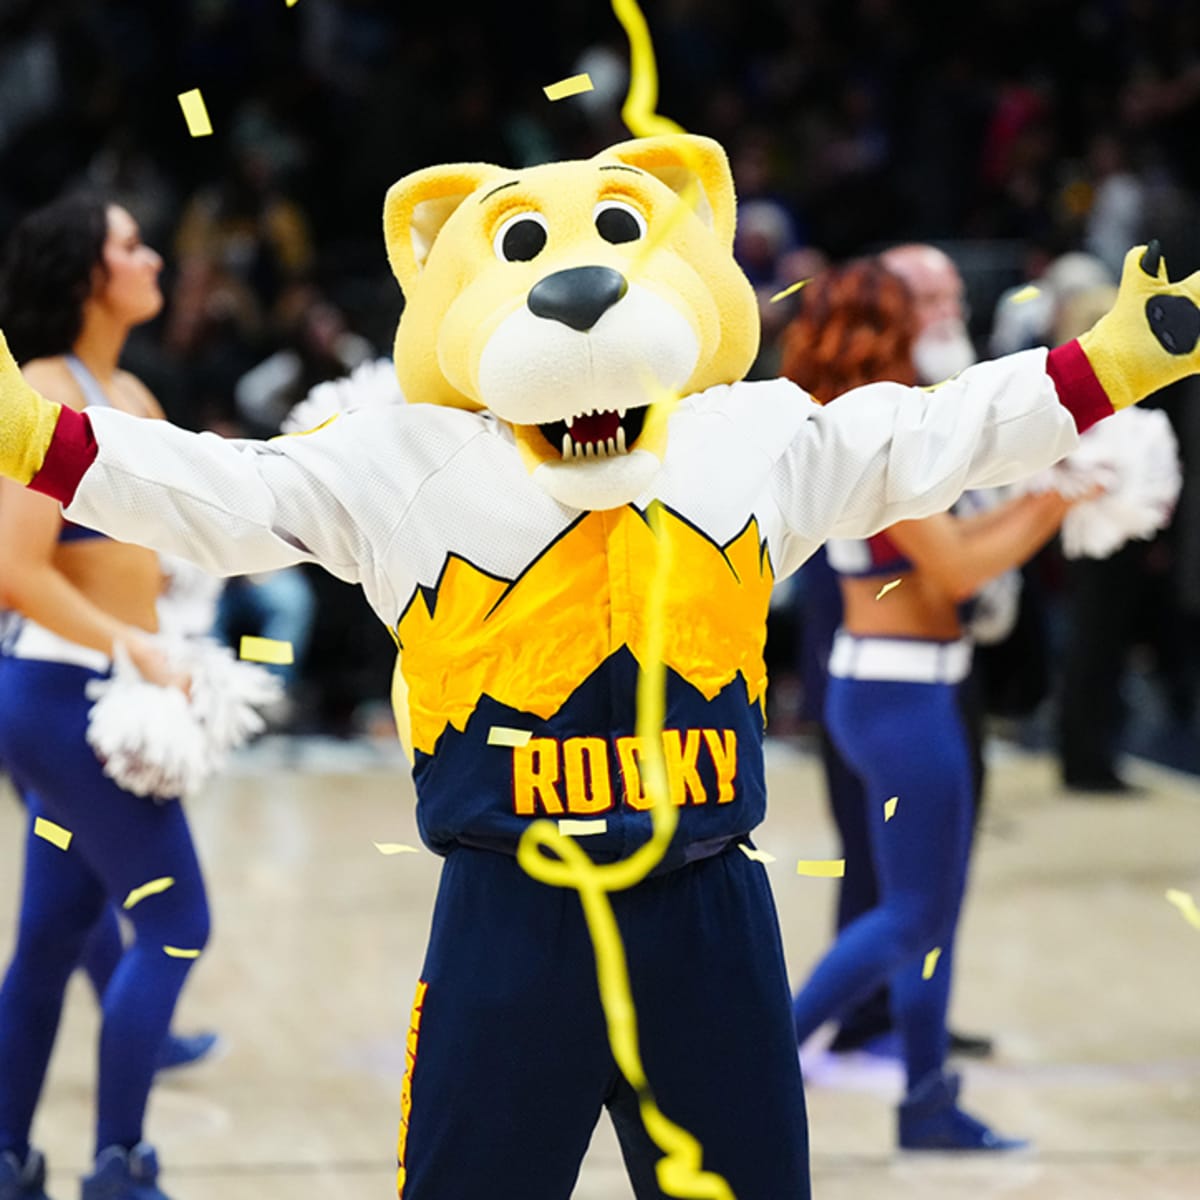 Money-making mascots: The cute, sweaty secret weapon for pro sports teams